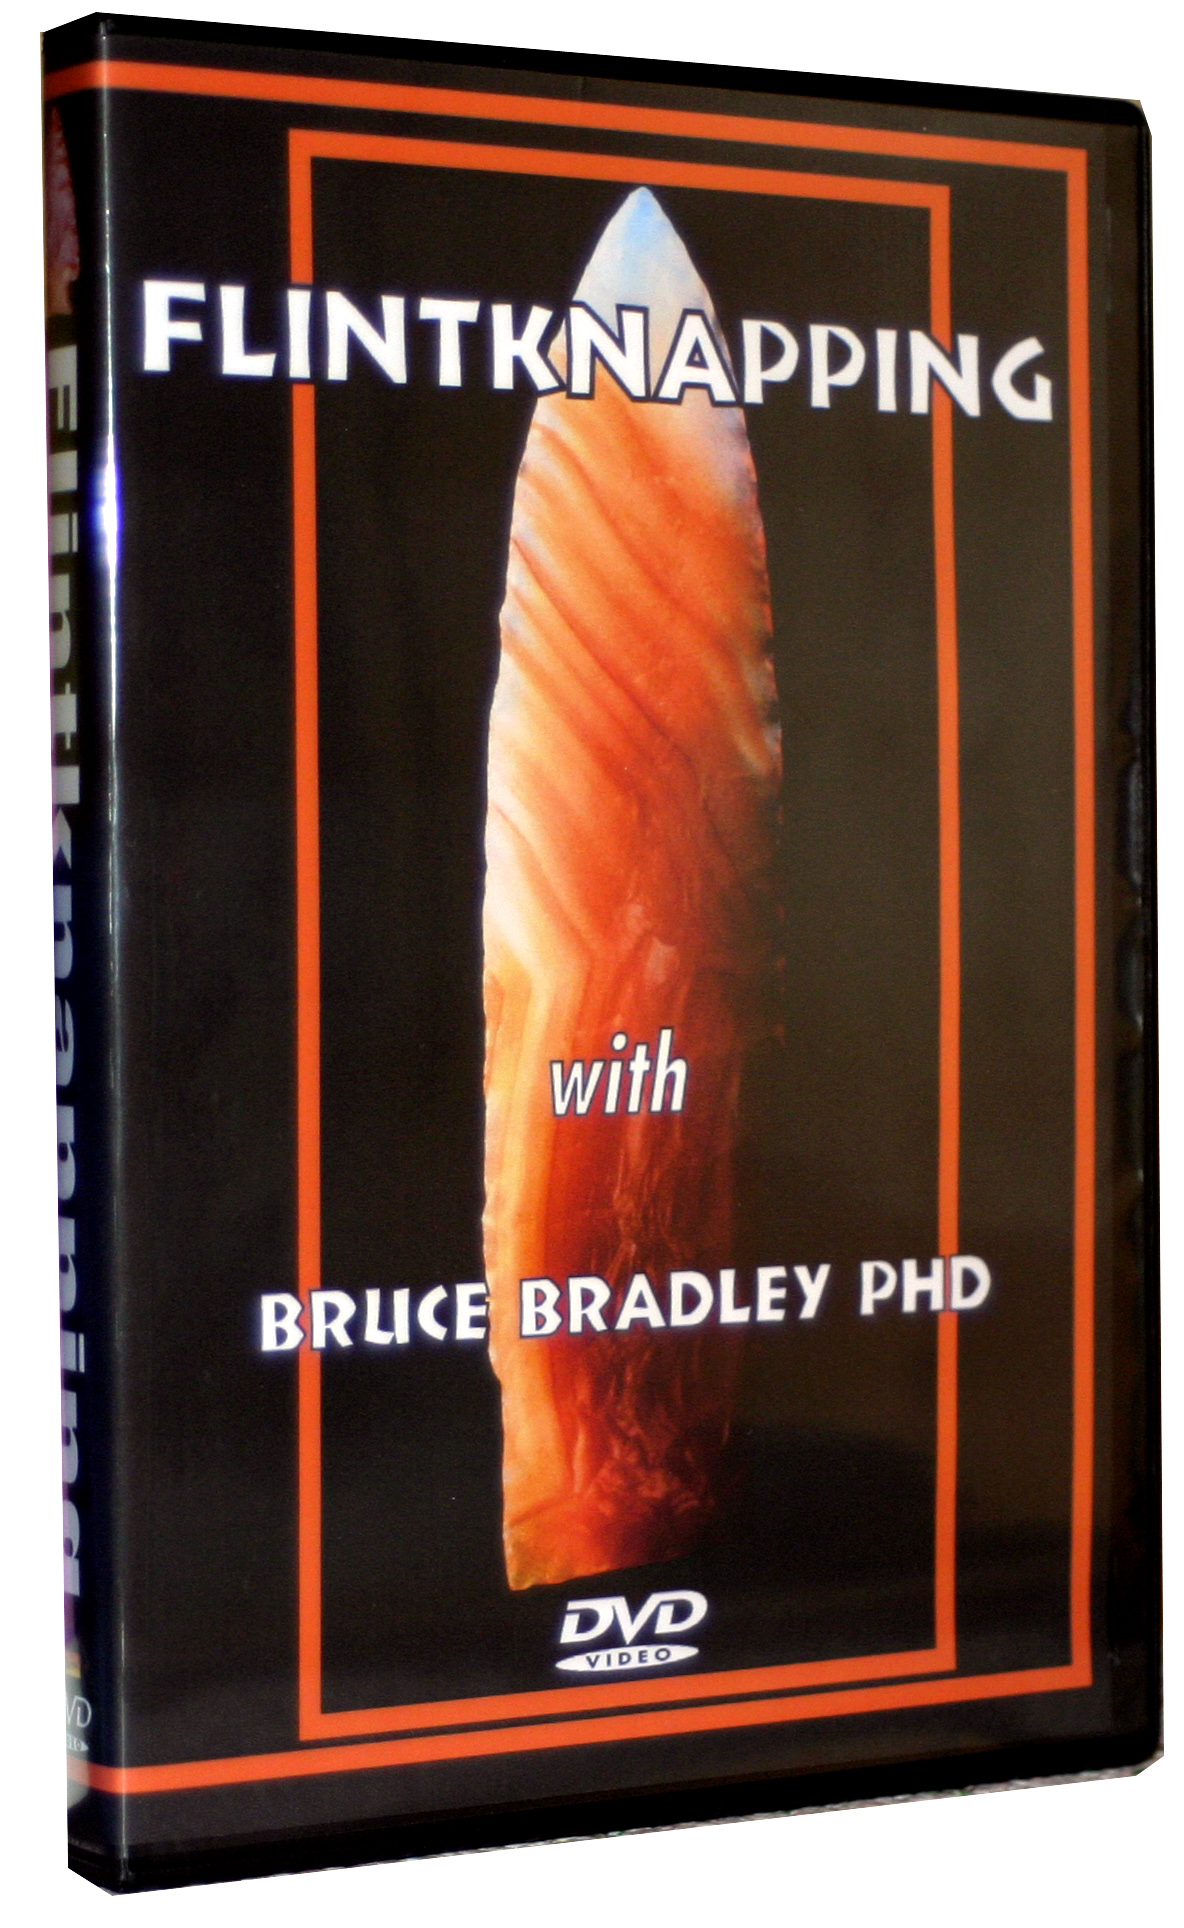 Flintknapping with Bruce Bradley